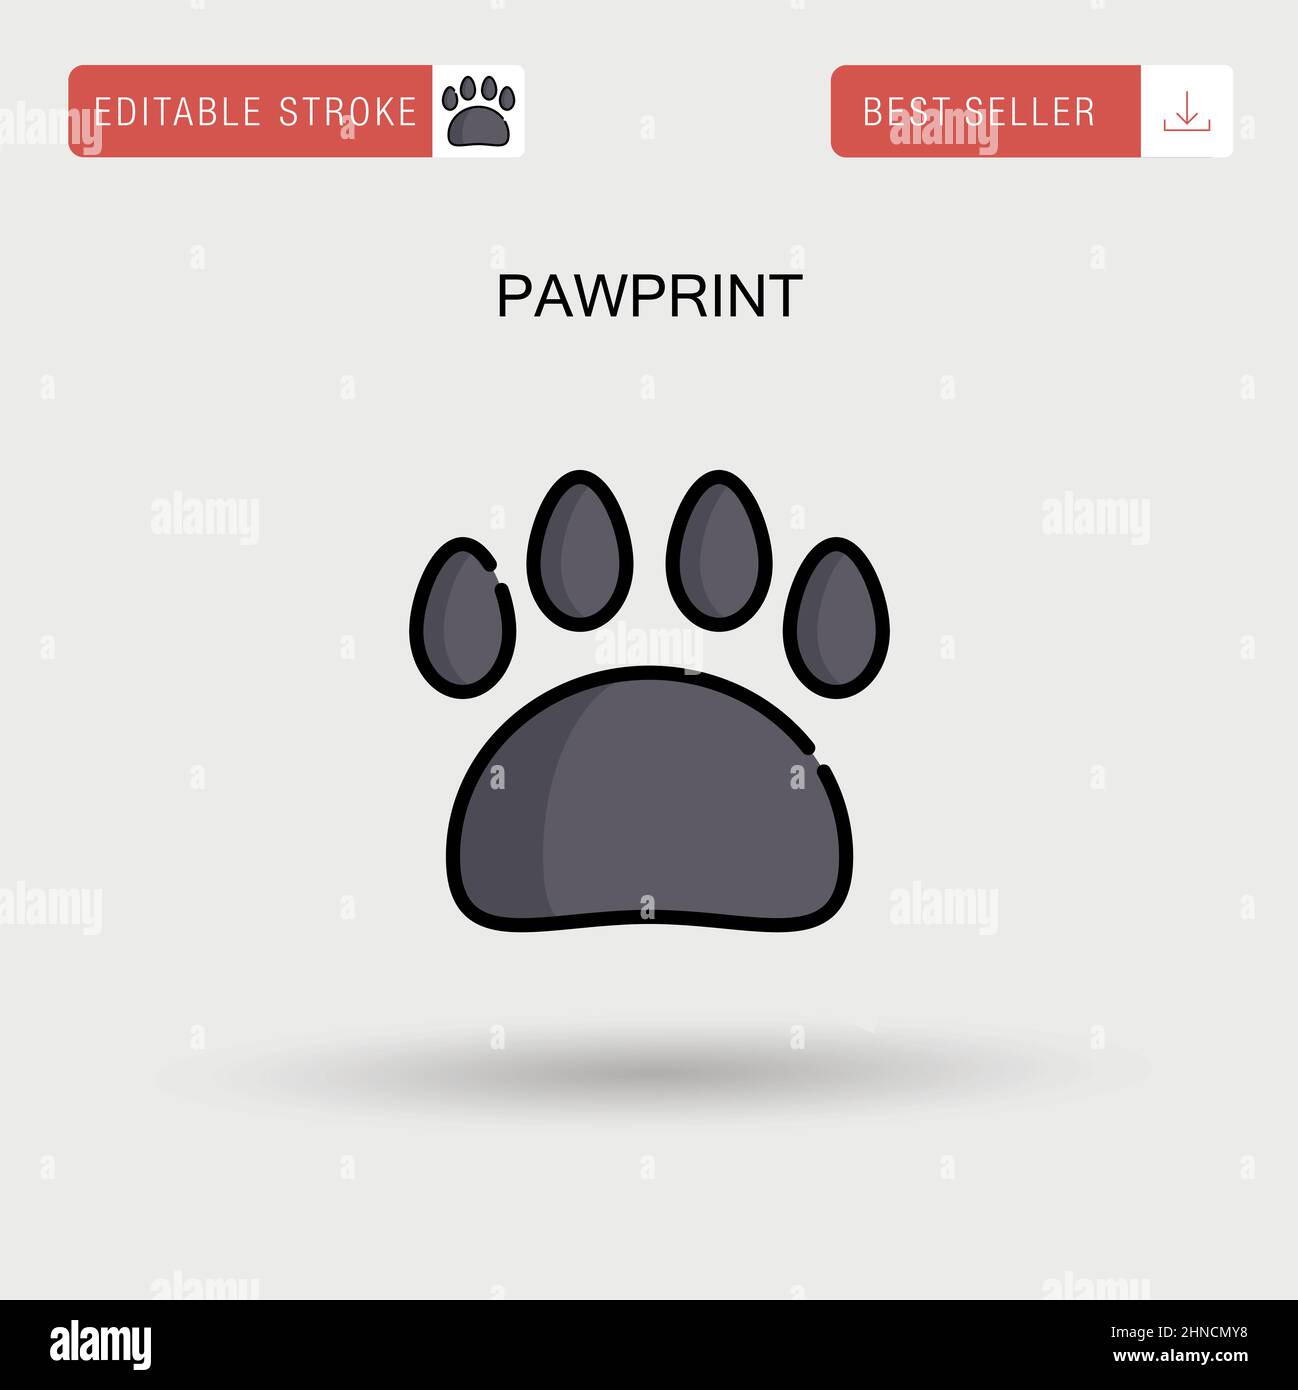 Pawprint Simple vector icon. Stock Vector